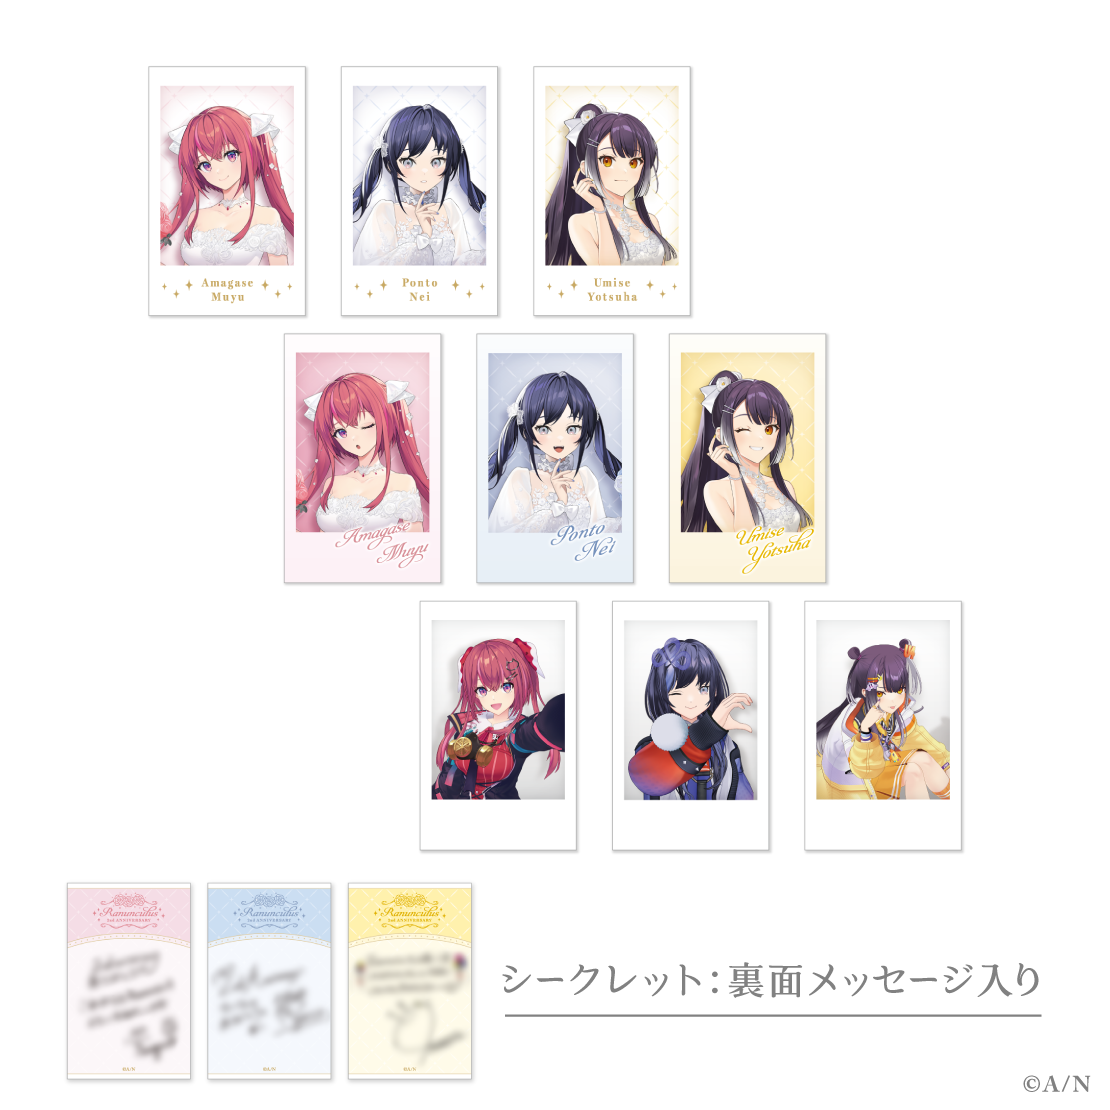 【Ranunculus 2nd Anniversary】ランダムチェキ風カード